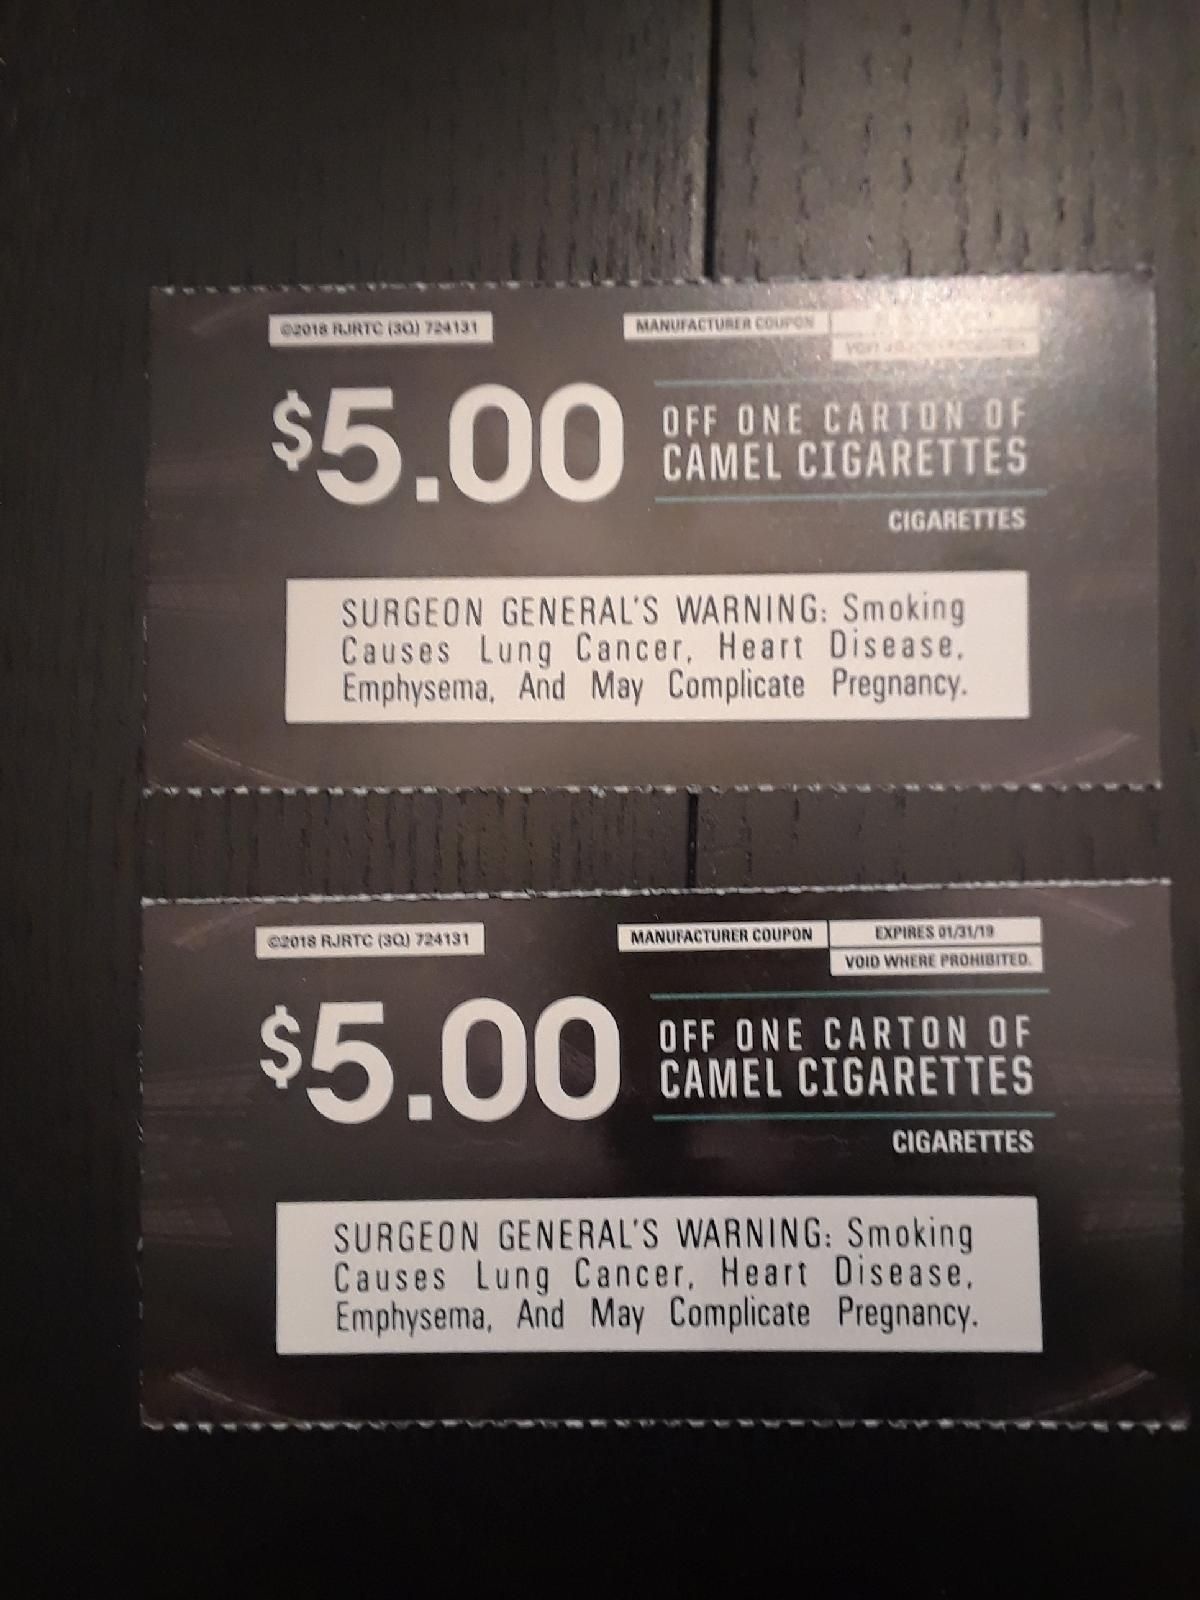 Marlboro Cigarette Coupons (#142982483313) - Gift Cards &amp;amp; Coupons - Free Printable Newport Cigarette Coupons